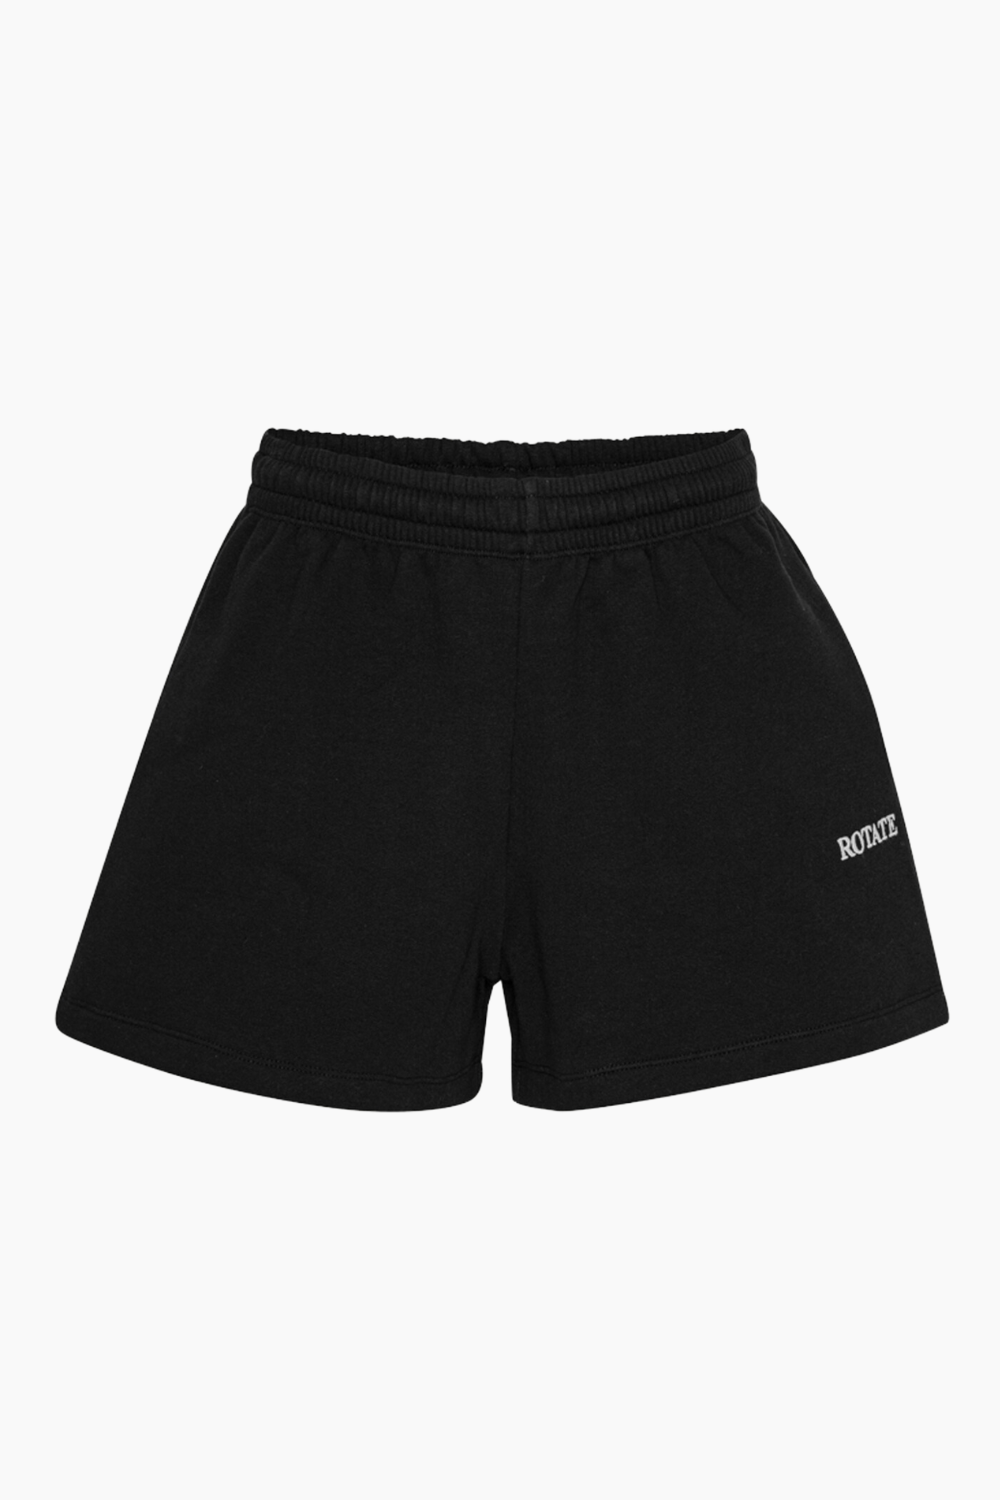 Se High Waist Shorts - Black - ROTATE - Sort XS hos QNTS.dk